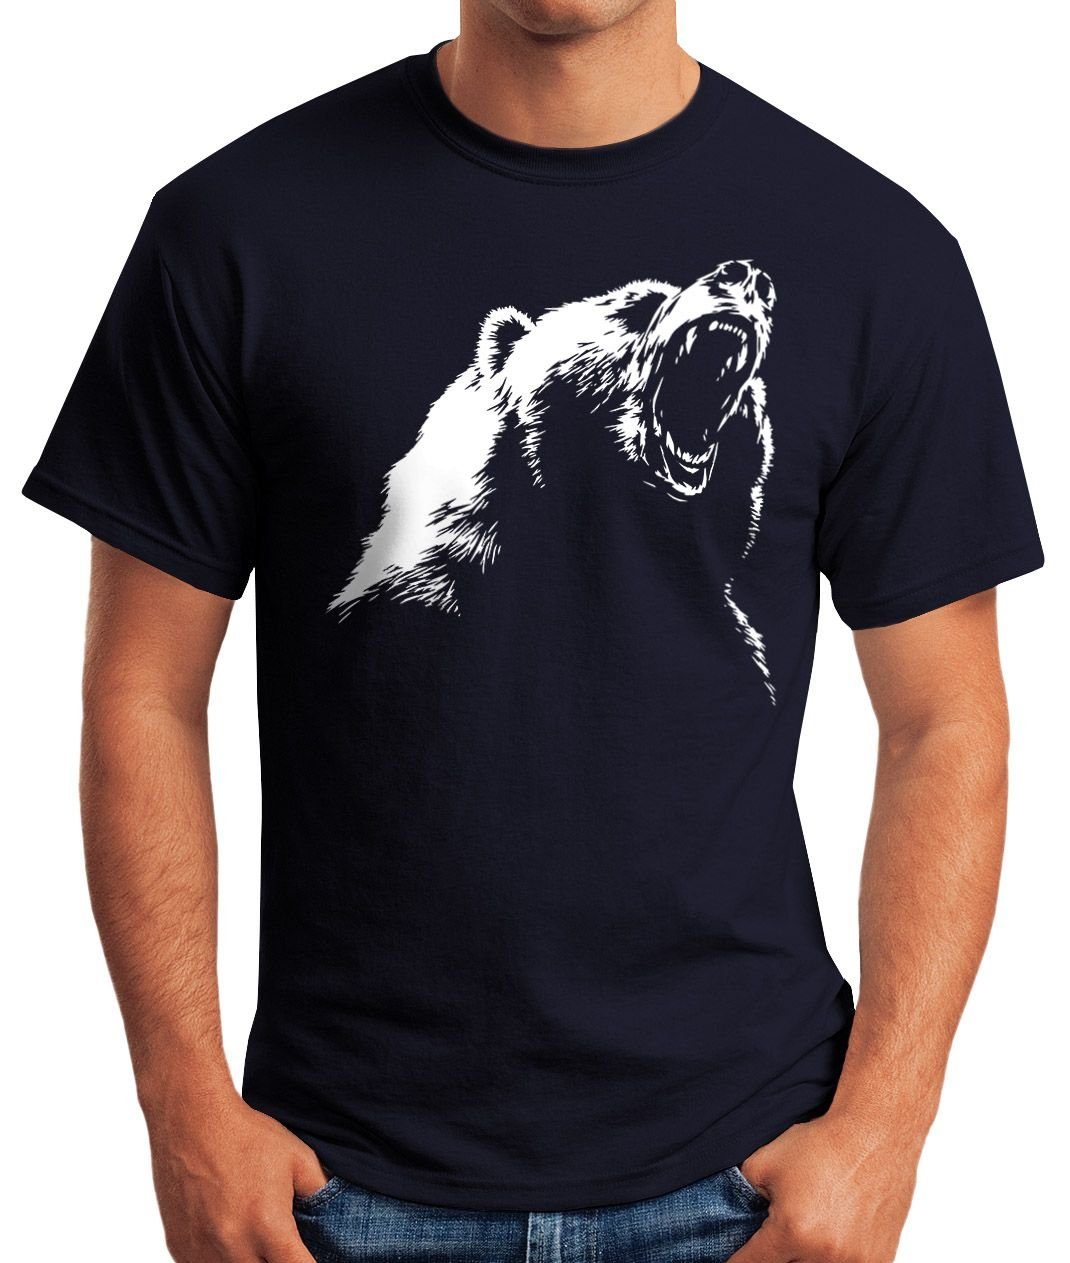 MoonWorks Print-Shirt Herren T-Shirt Moonworks® navy Bär Print Grizzly mit